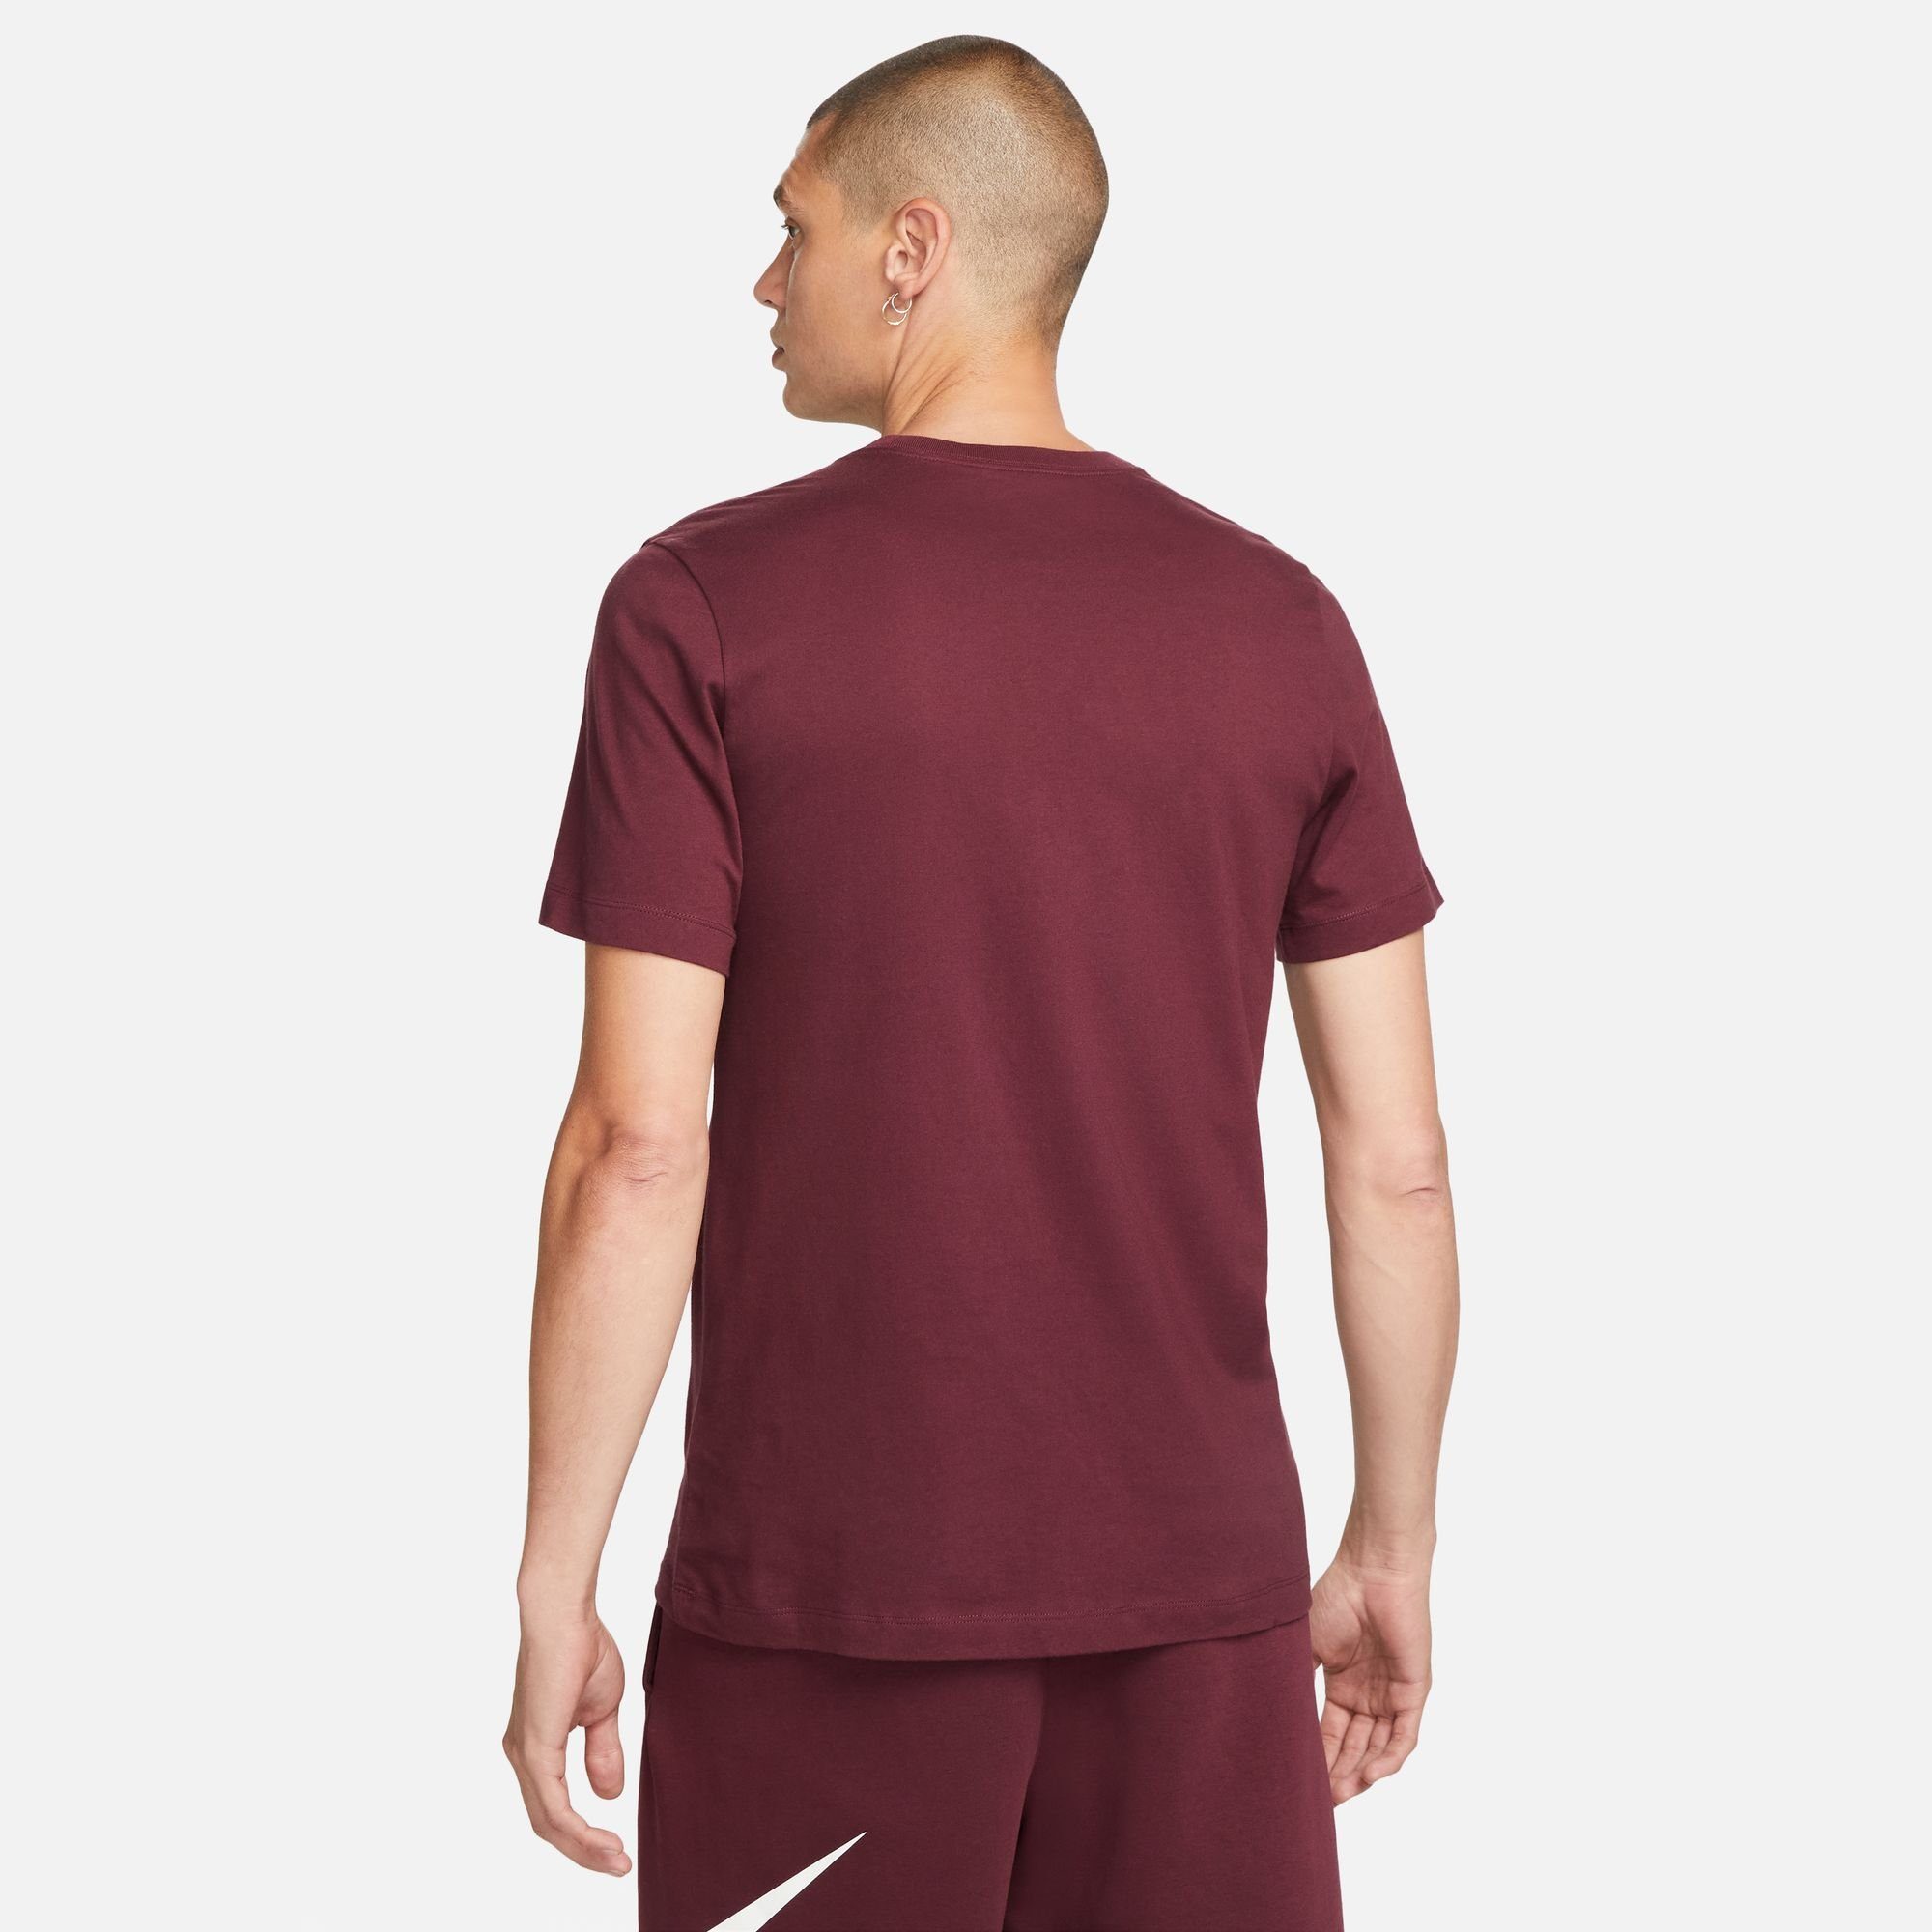 JDI NIGHT Sportswear MAROON T-Shirt MEN'S T-SHIRT Nike